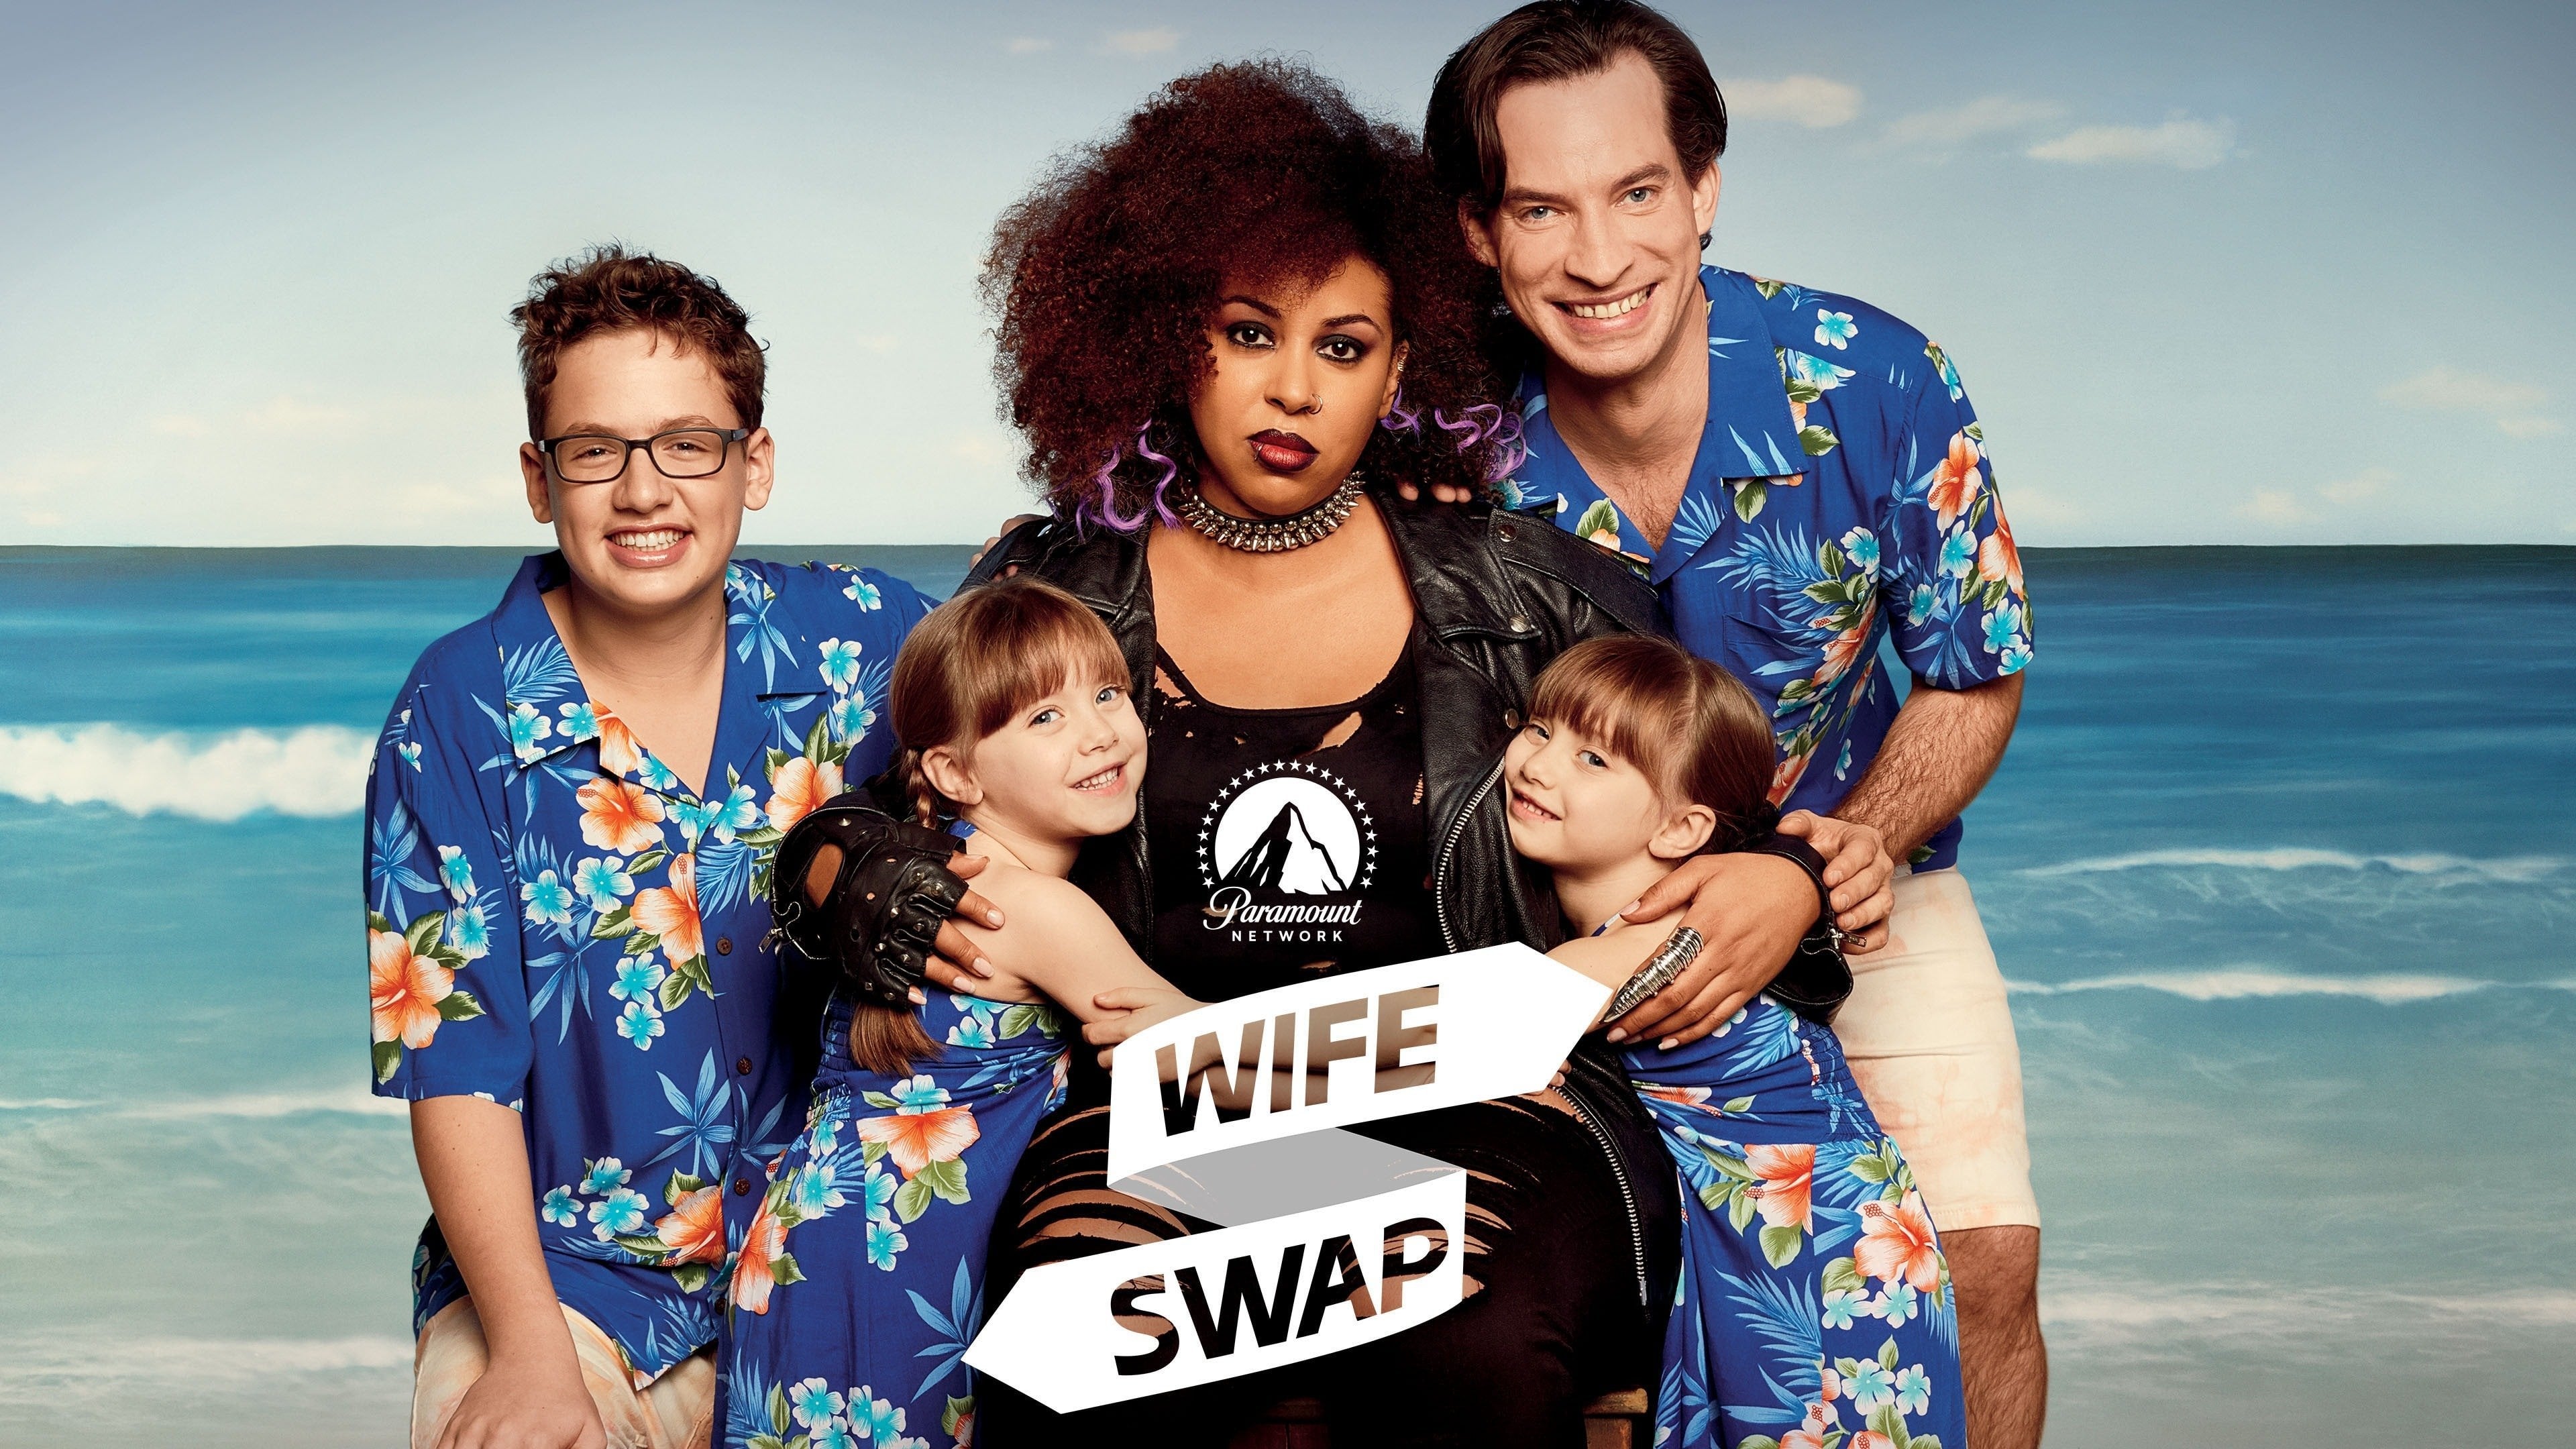 Swap wife 6. Family swap (2021). Swapping Family 2019. Family swap 2020. Family swap - Lauren.